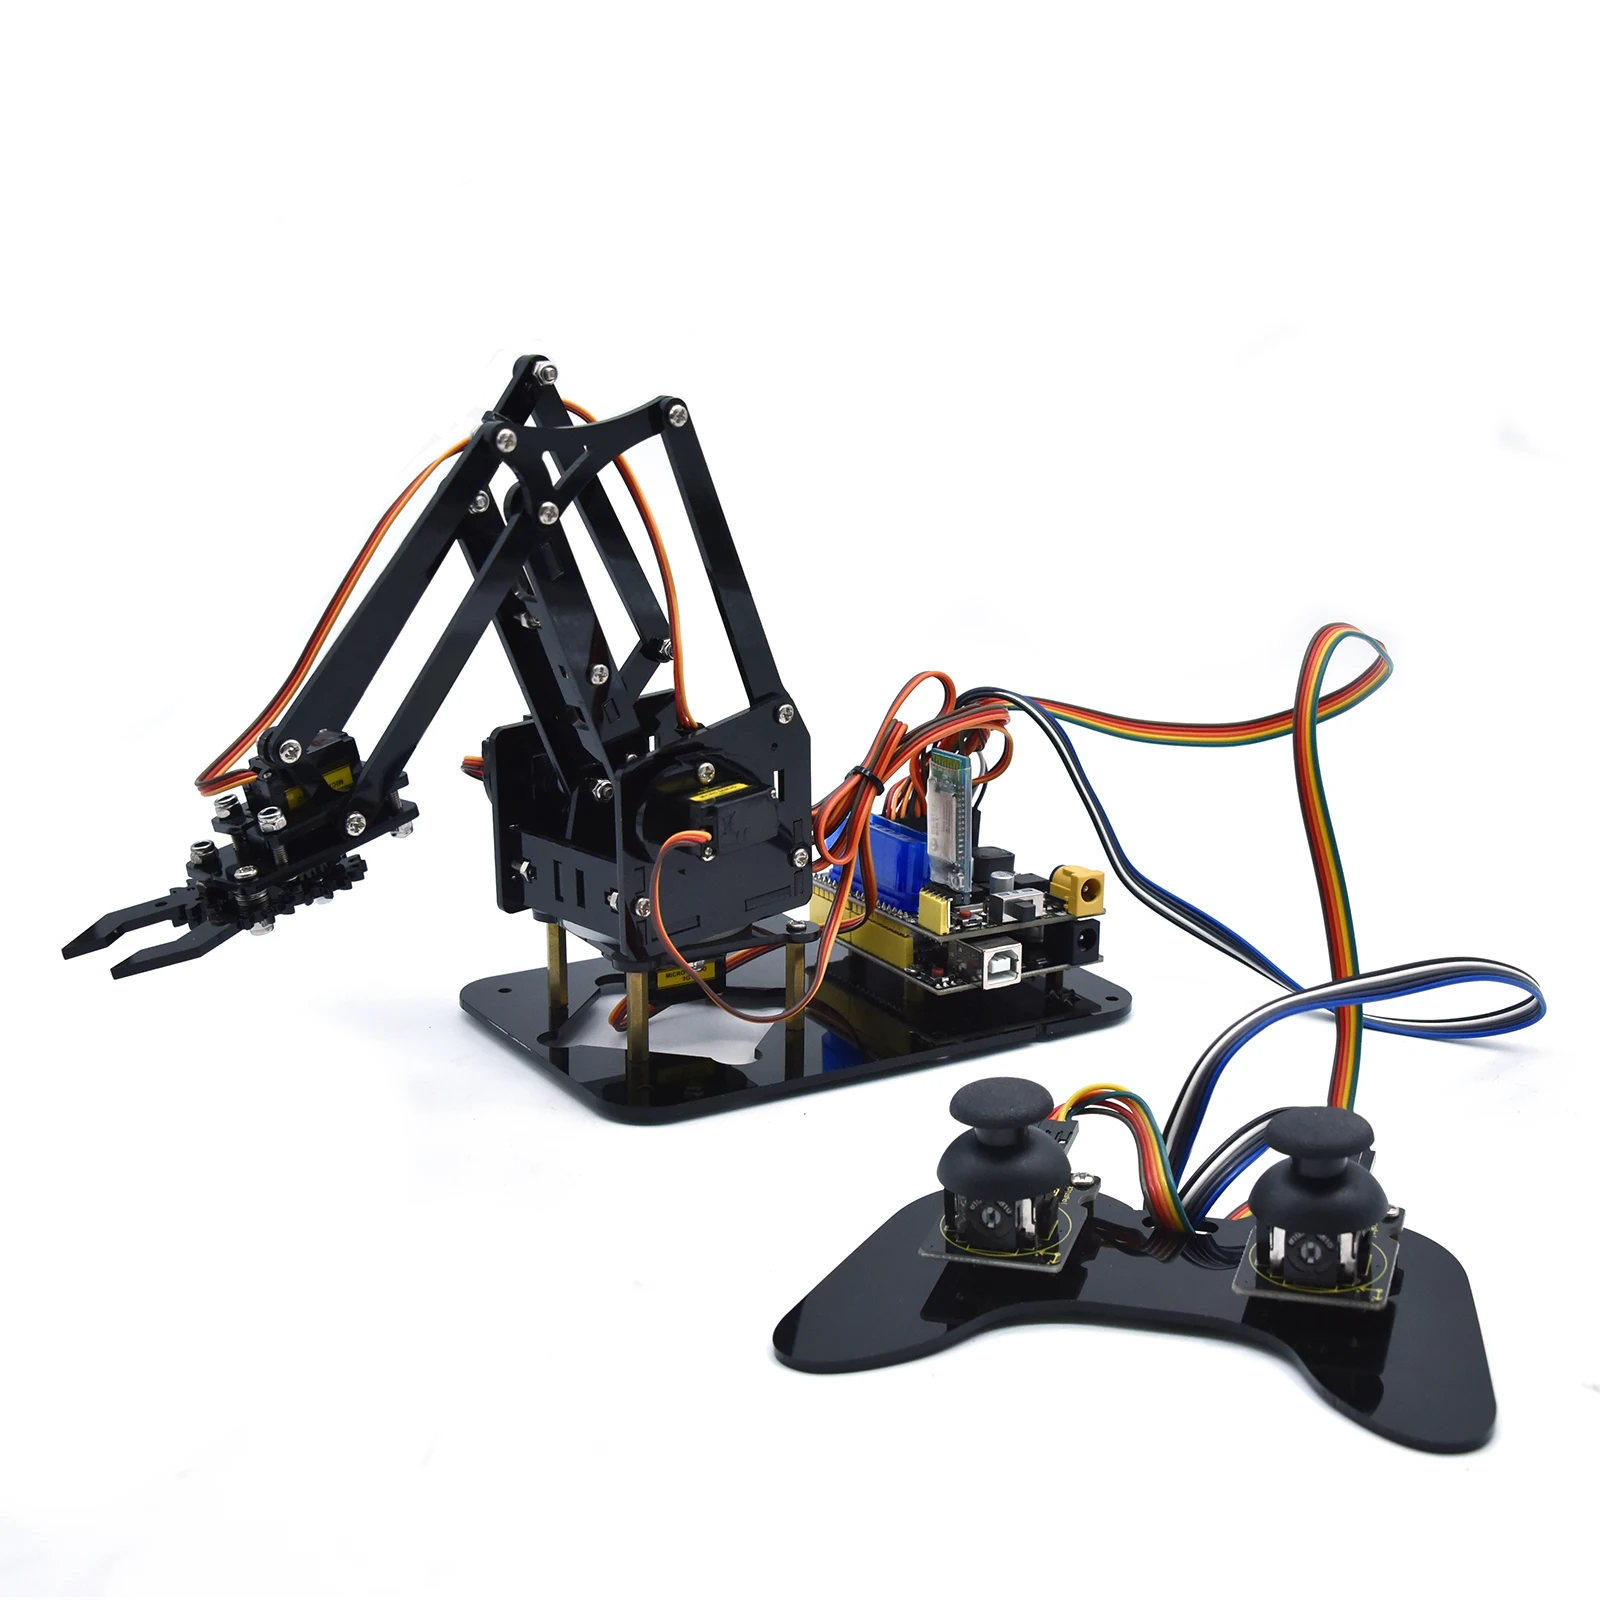 

Joystick Memory 4 axis Mini desktop robot arm kit for Arduino educational robot arm